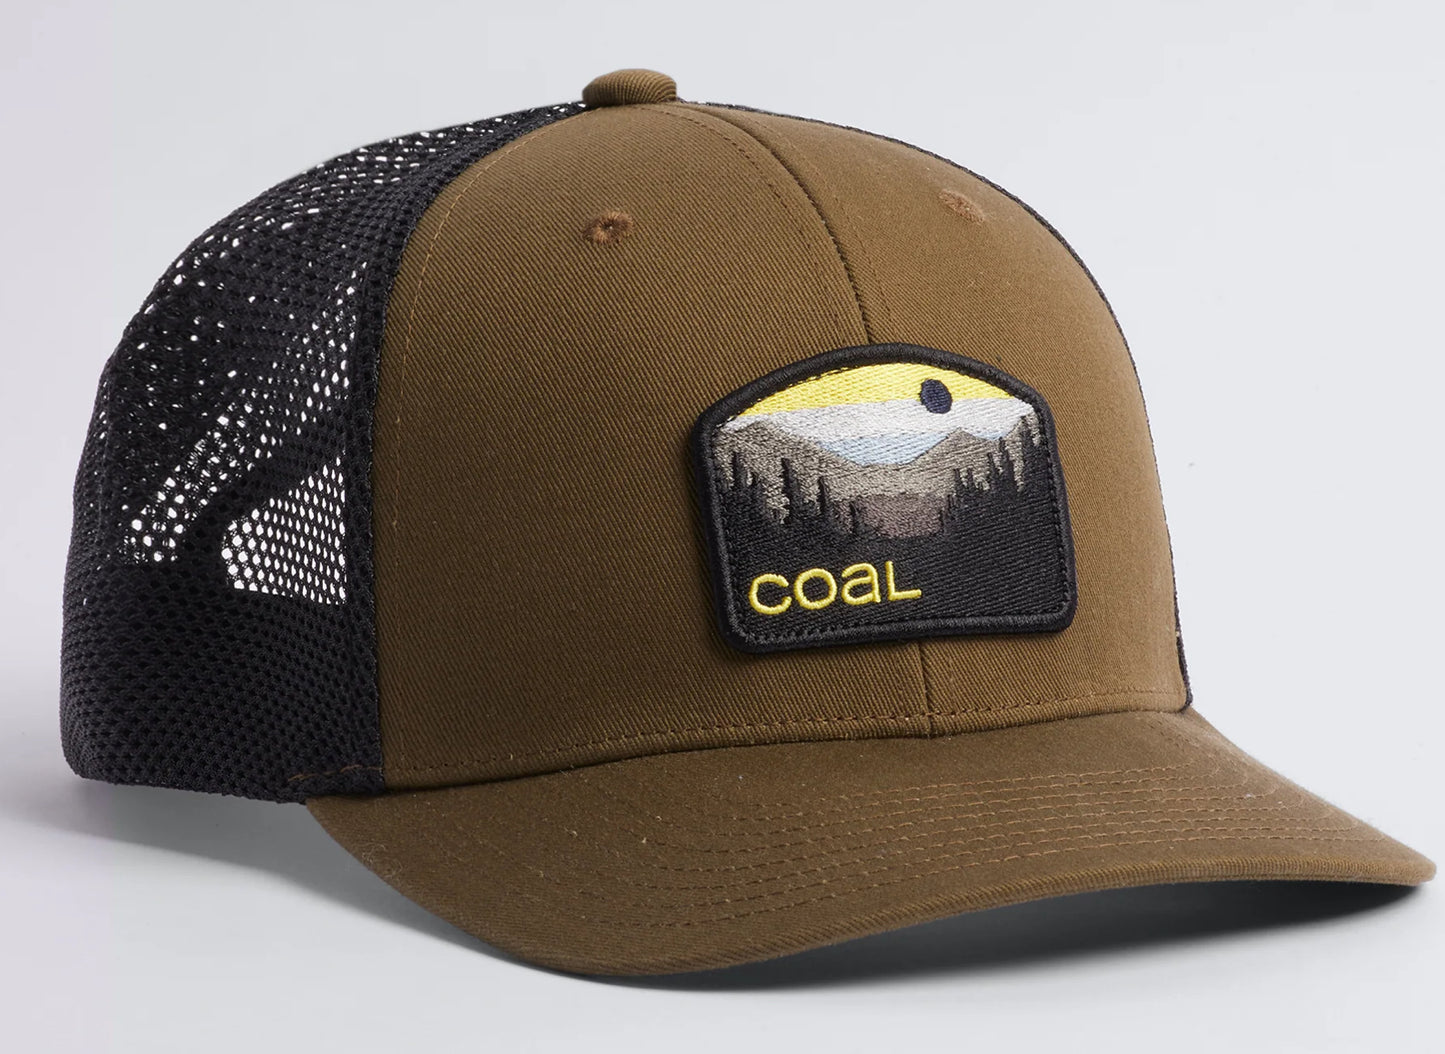 Coal - The Hauler Low One - Trucker Cap